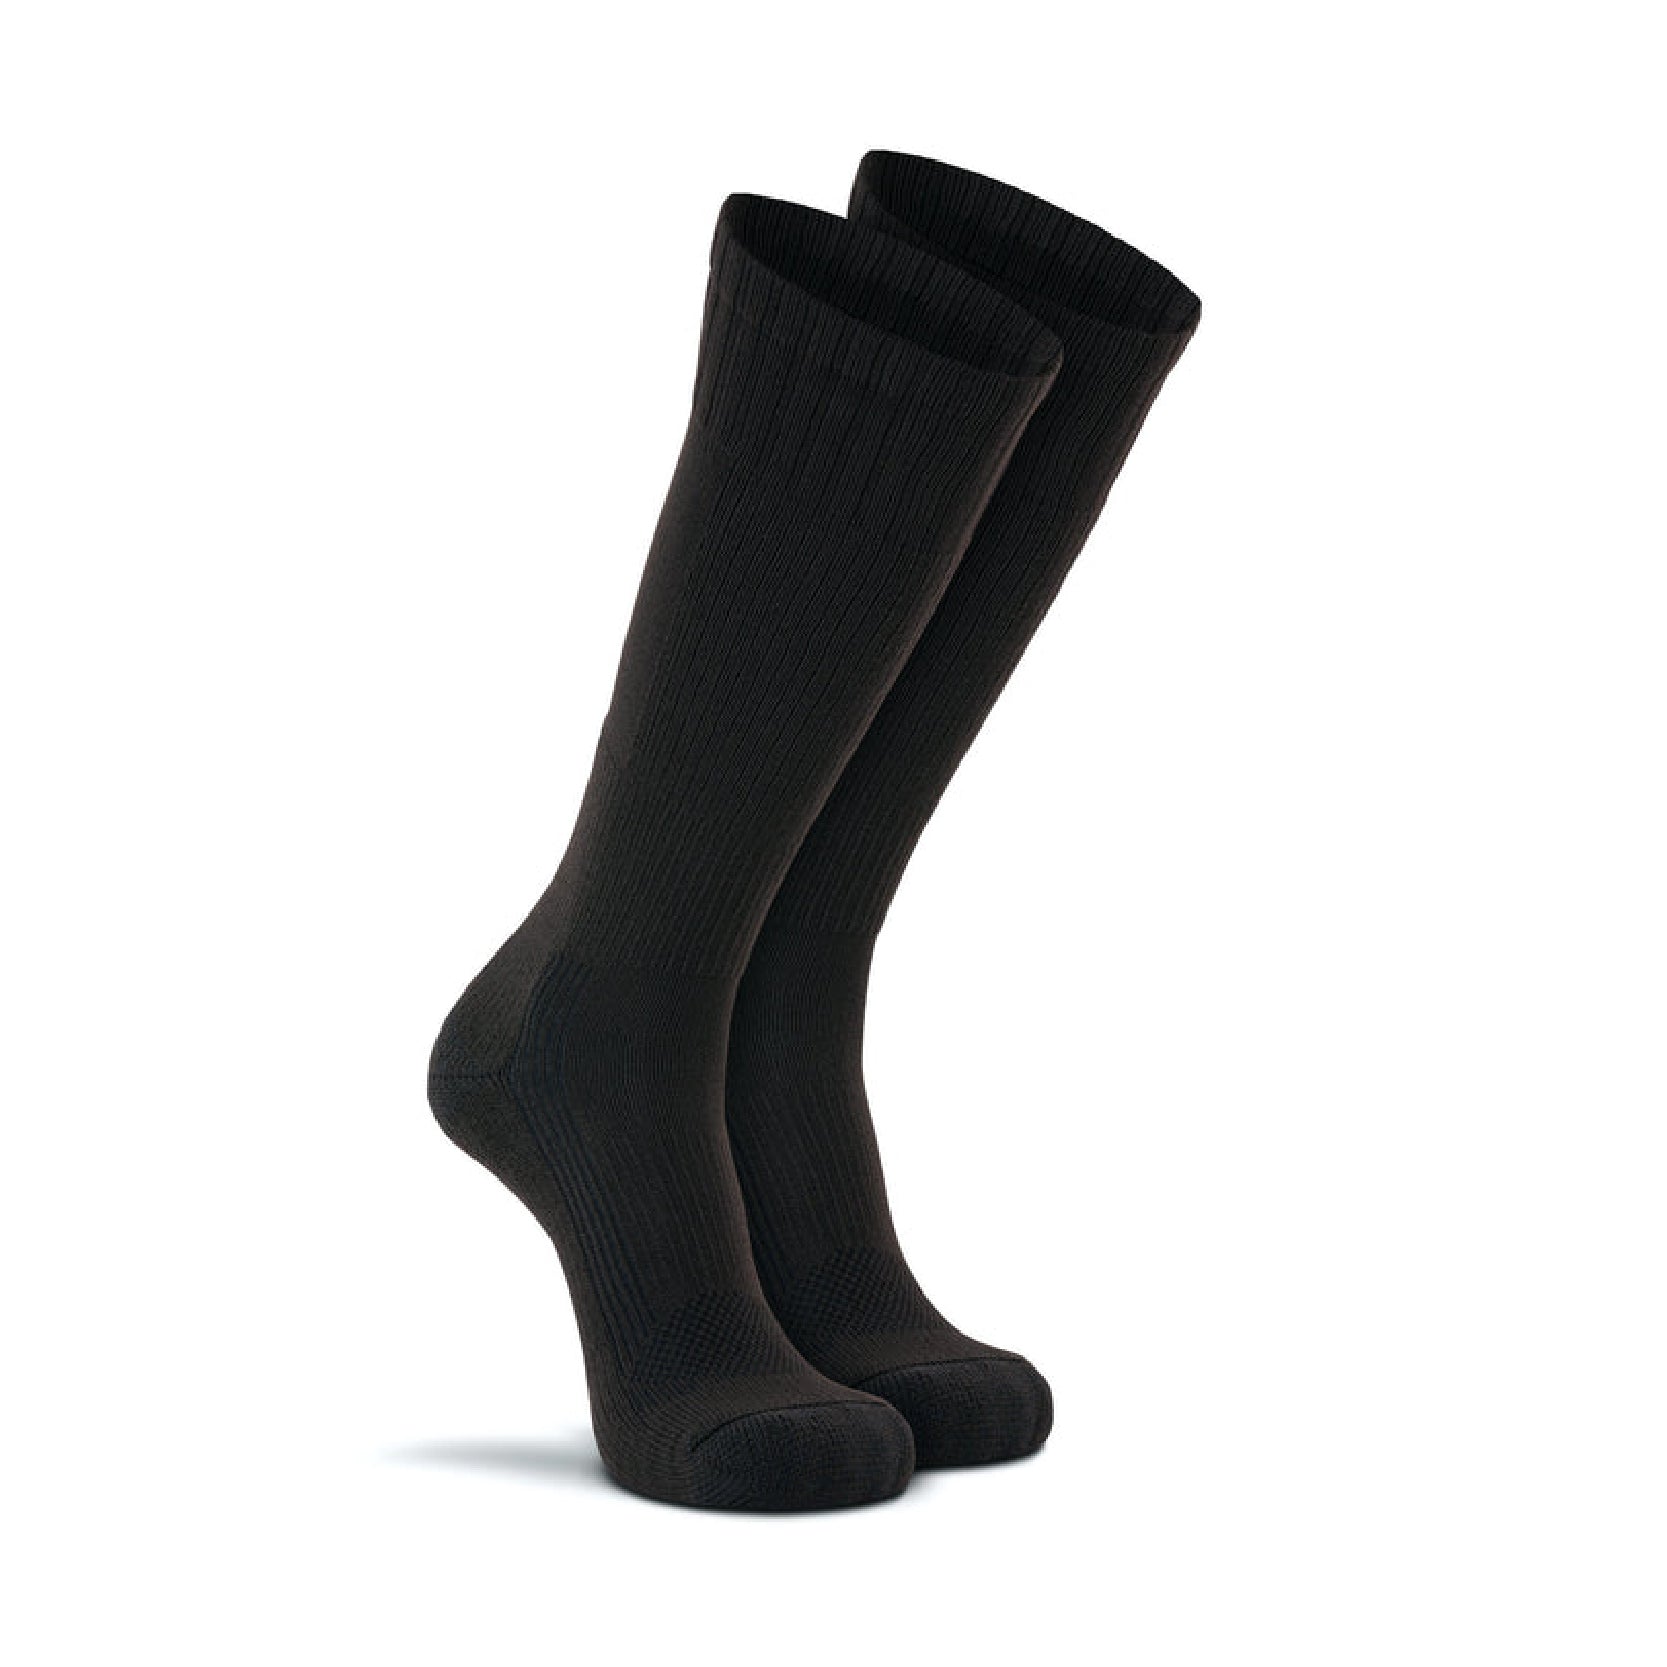 FOX RIVER MILLS - Military Tactical Boot Lightweight Mid-Calf Socks